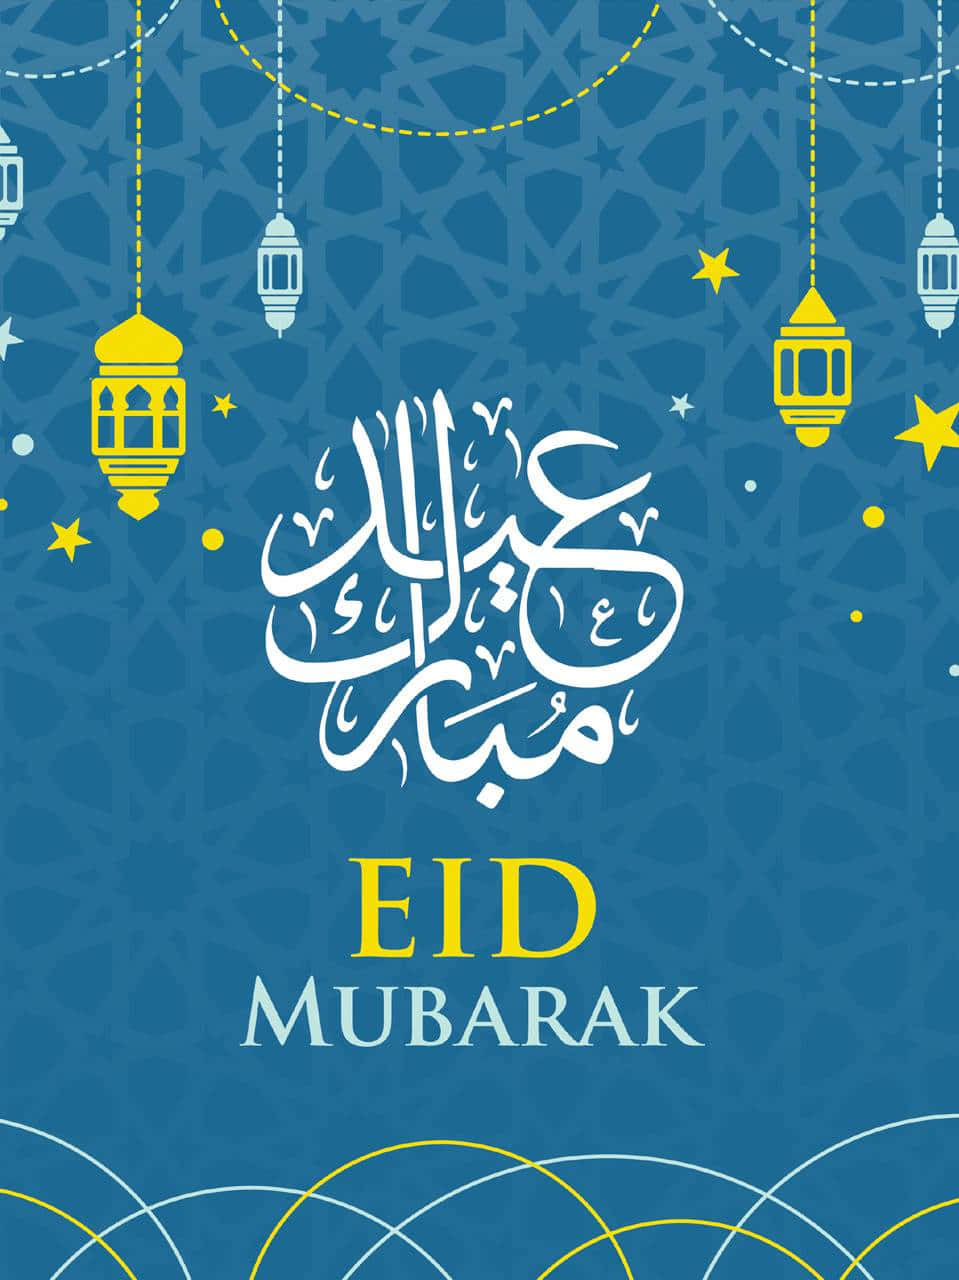 Eid Mubarak Greeting Card With Islamic Calligraphy